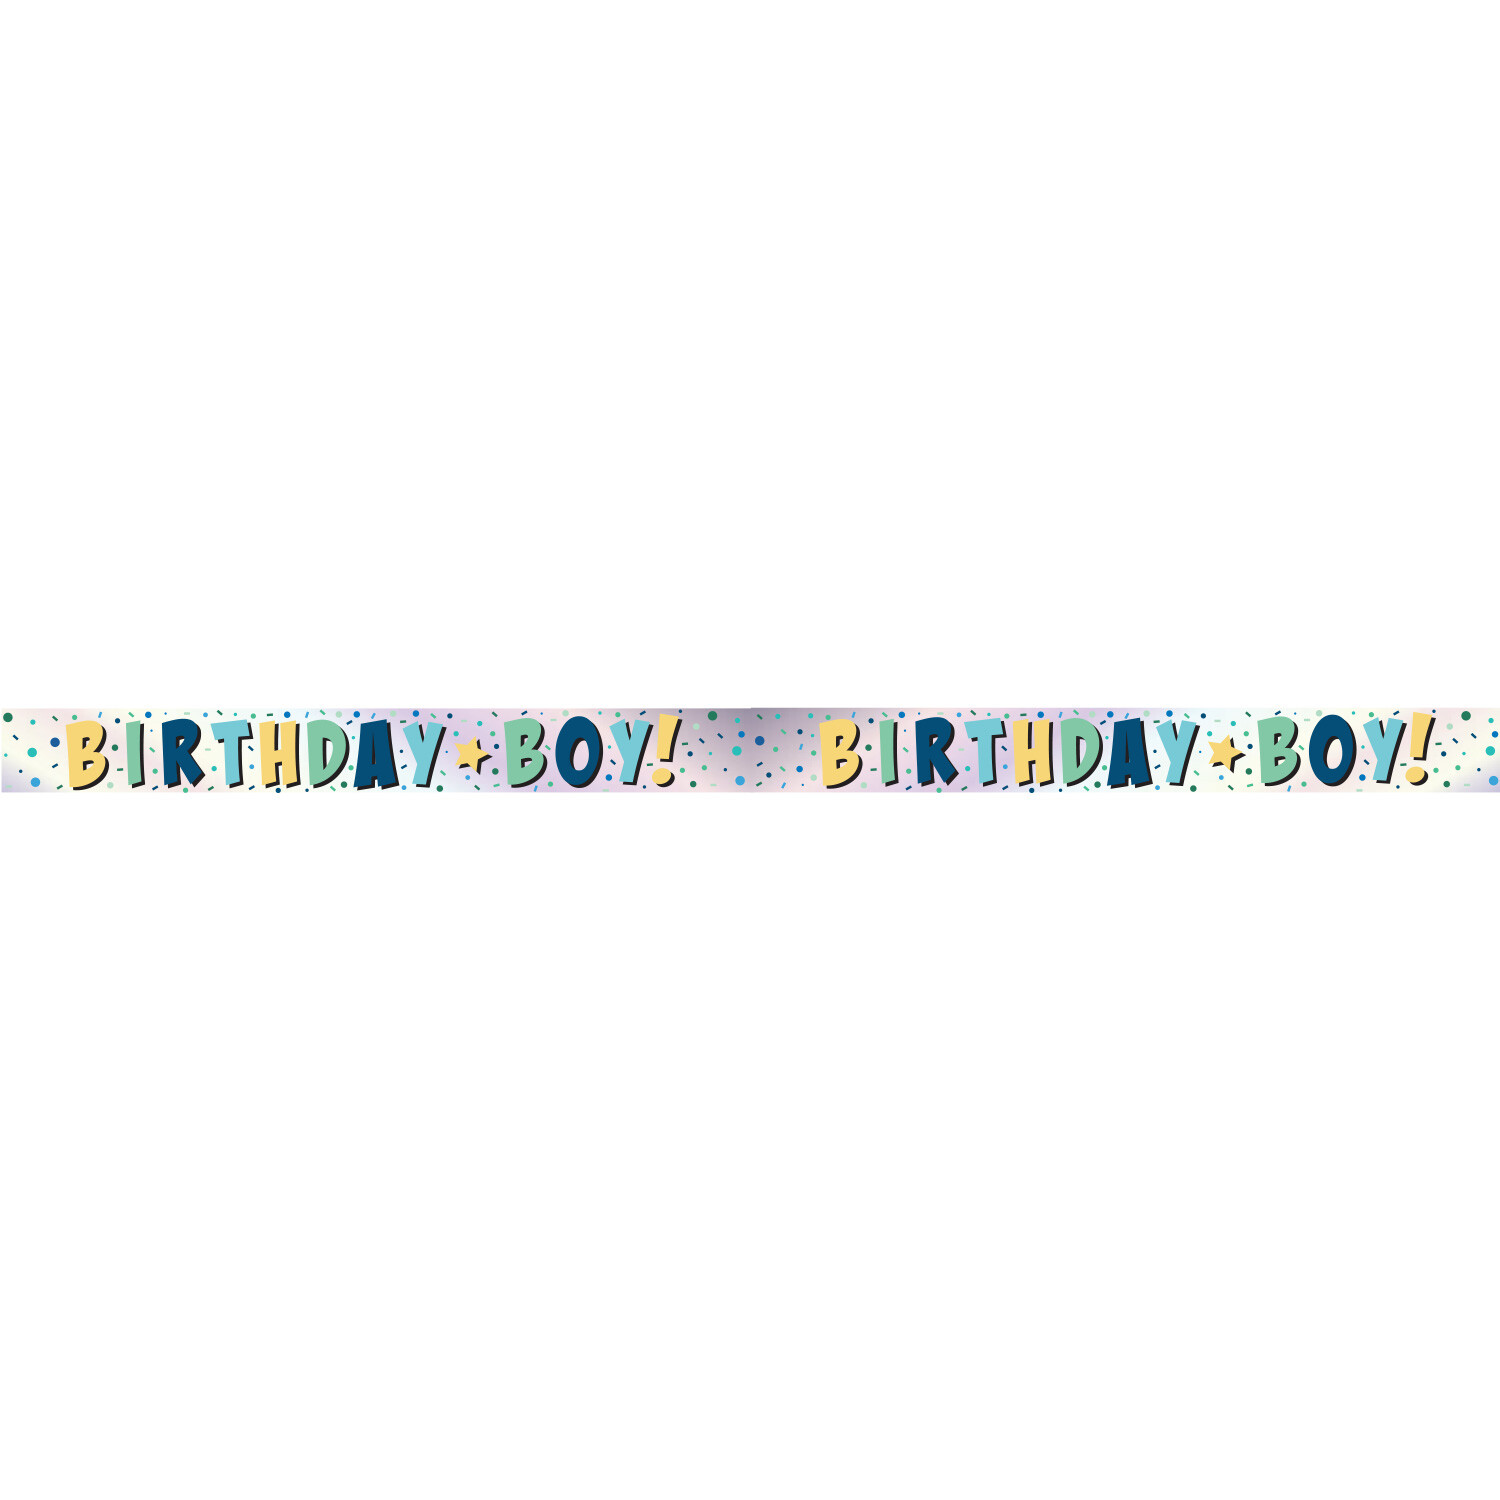 Birthday Boy Blue Foil Banner Image